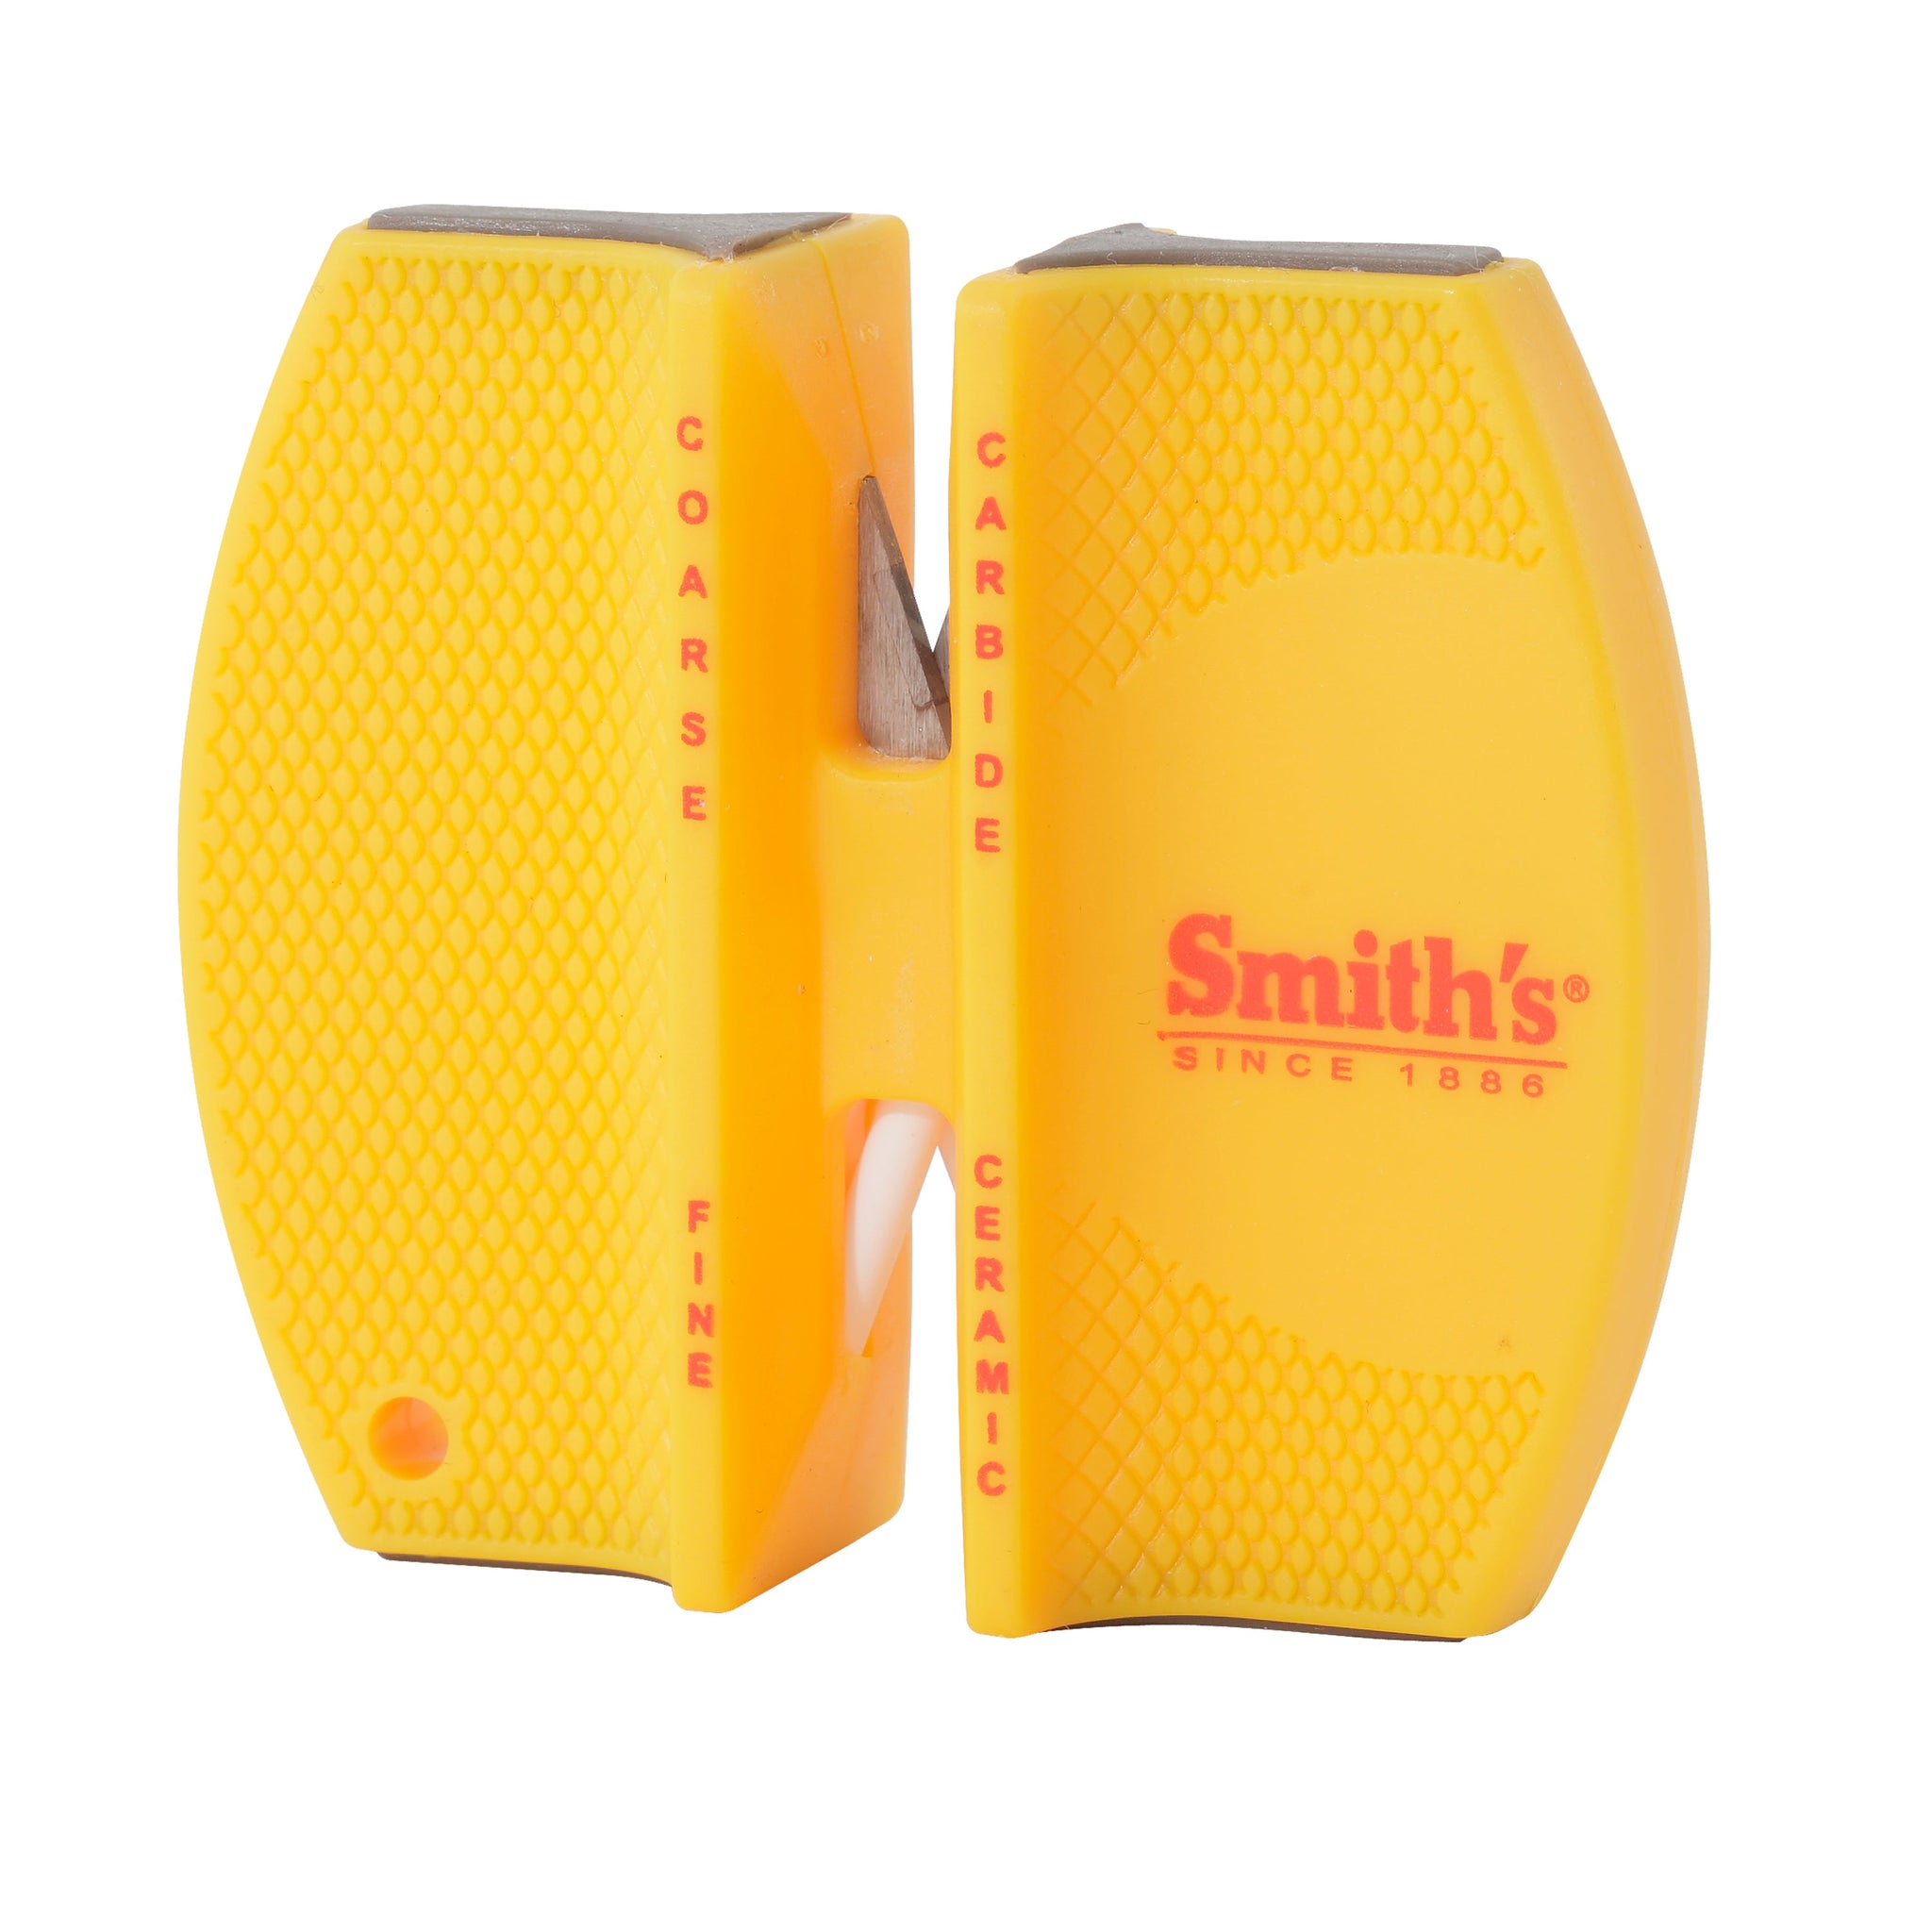 Smith 03942 Smith Knife Sharpener